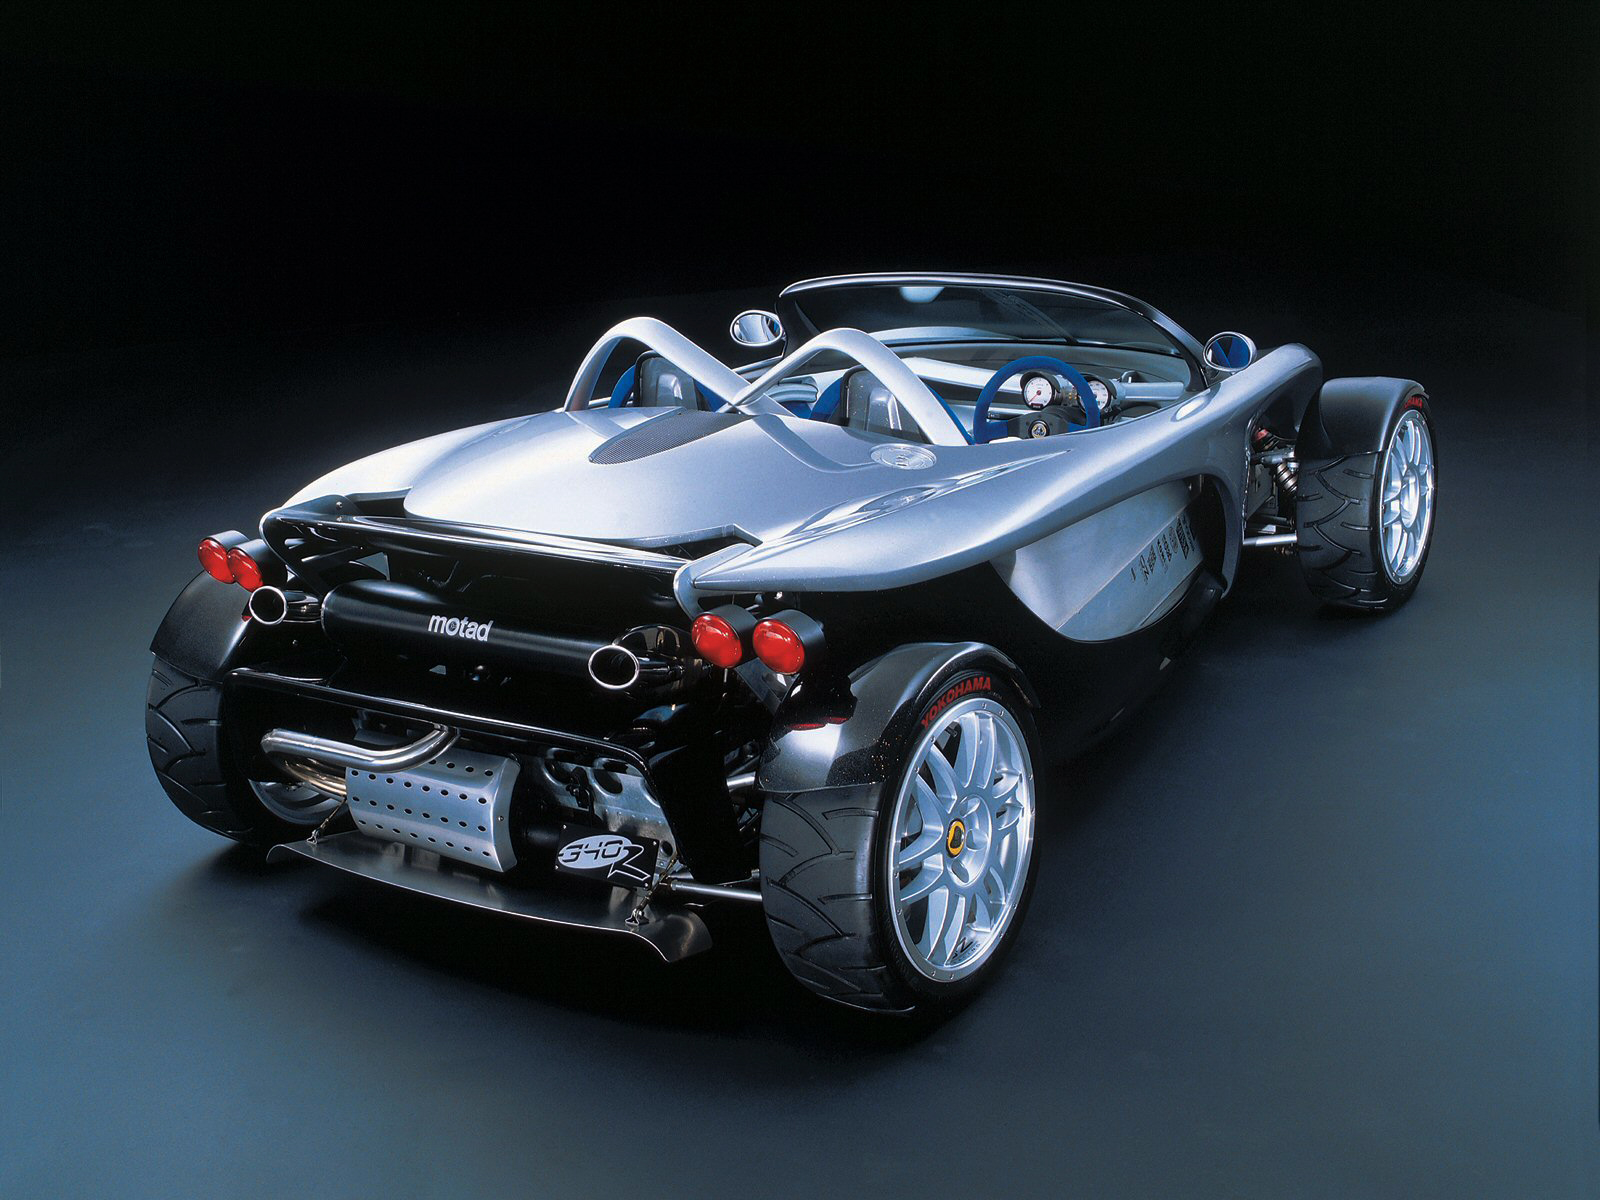 1999, Lotus, 340r, Concept, Supercar Wallpaper